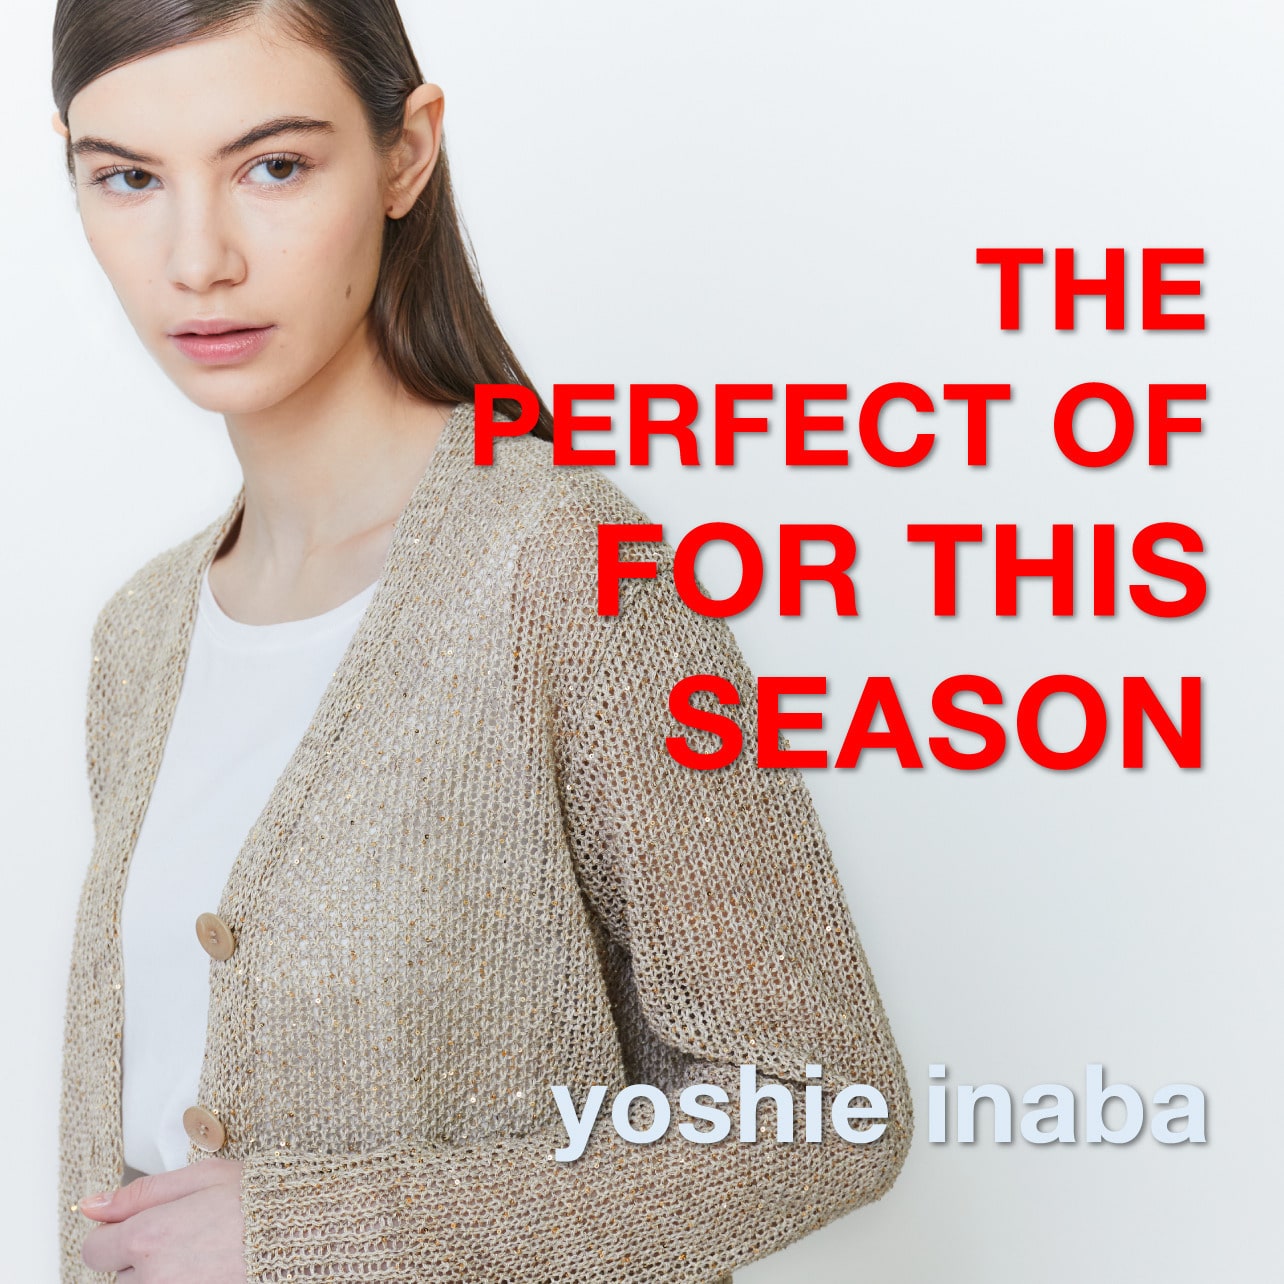 yoshie inaba（ヨシエイナバ） | BIGI online store - ビギ オンライン 